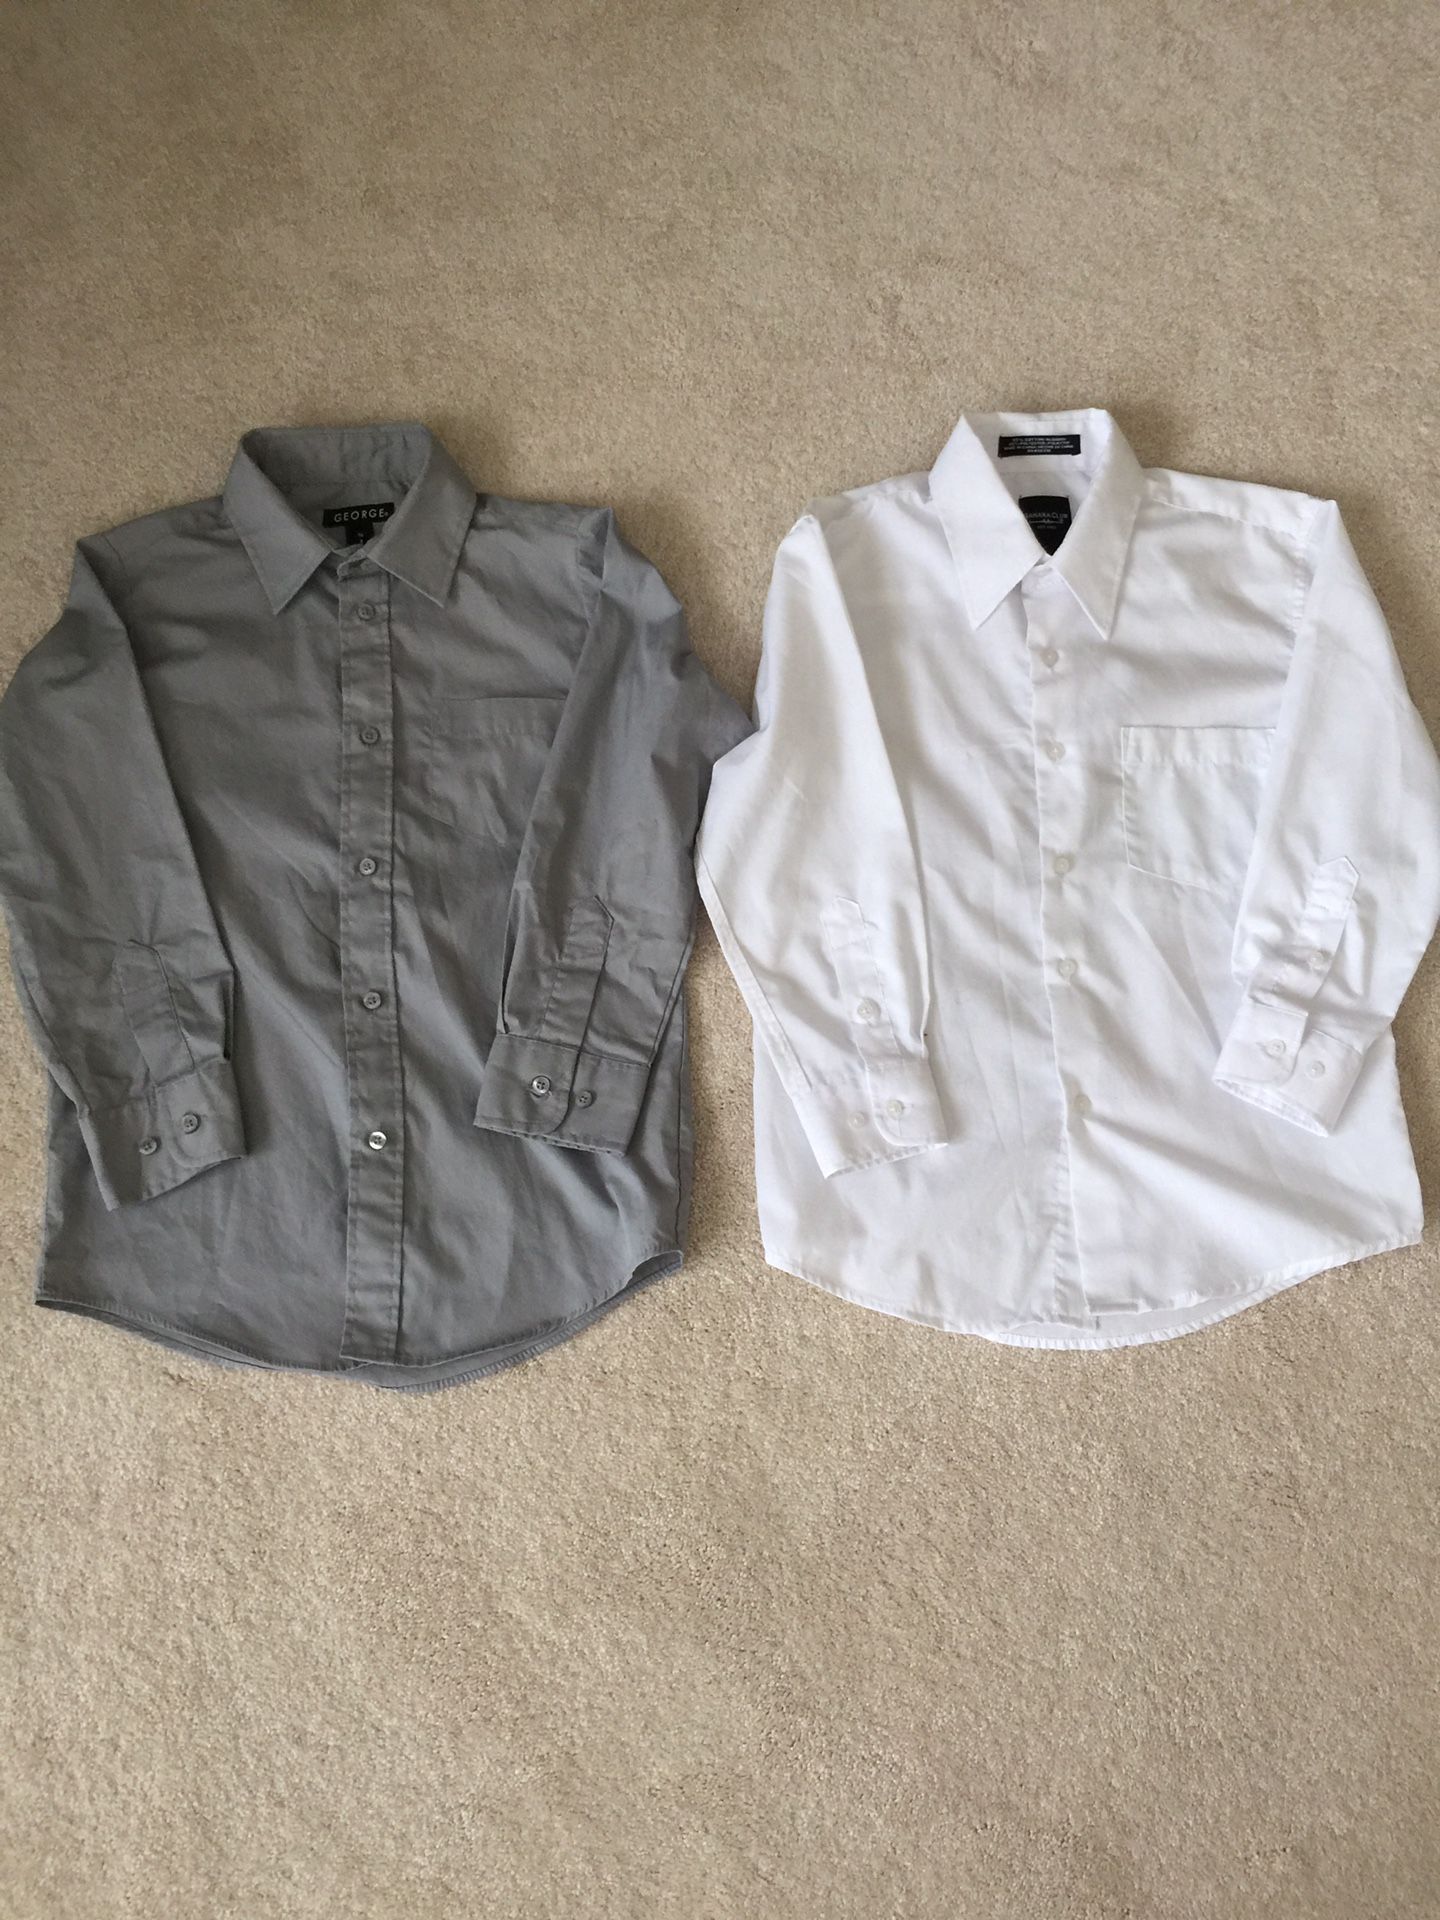 2 Like NEW Boys Size 8 Long Sleeve Collar Dress Shirts, Gray and White